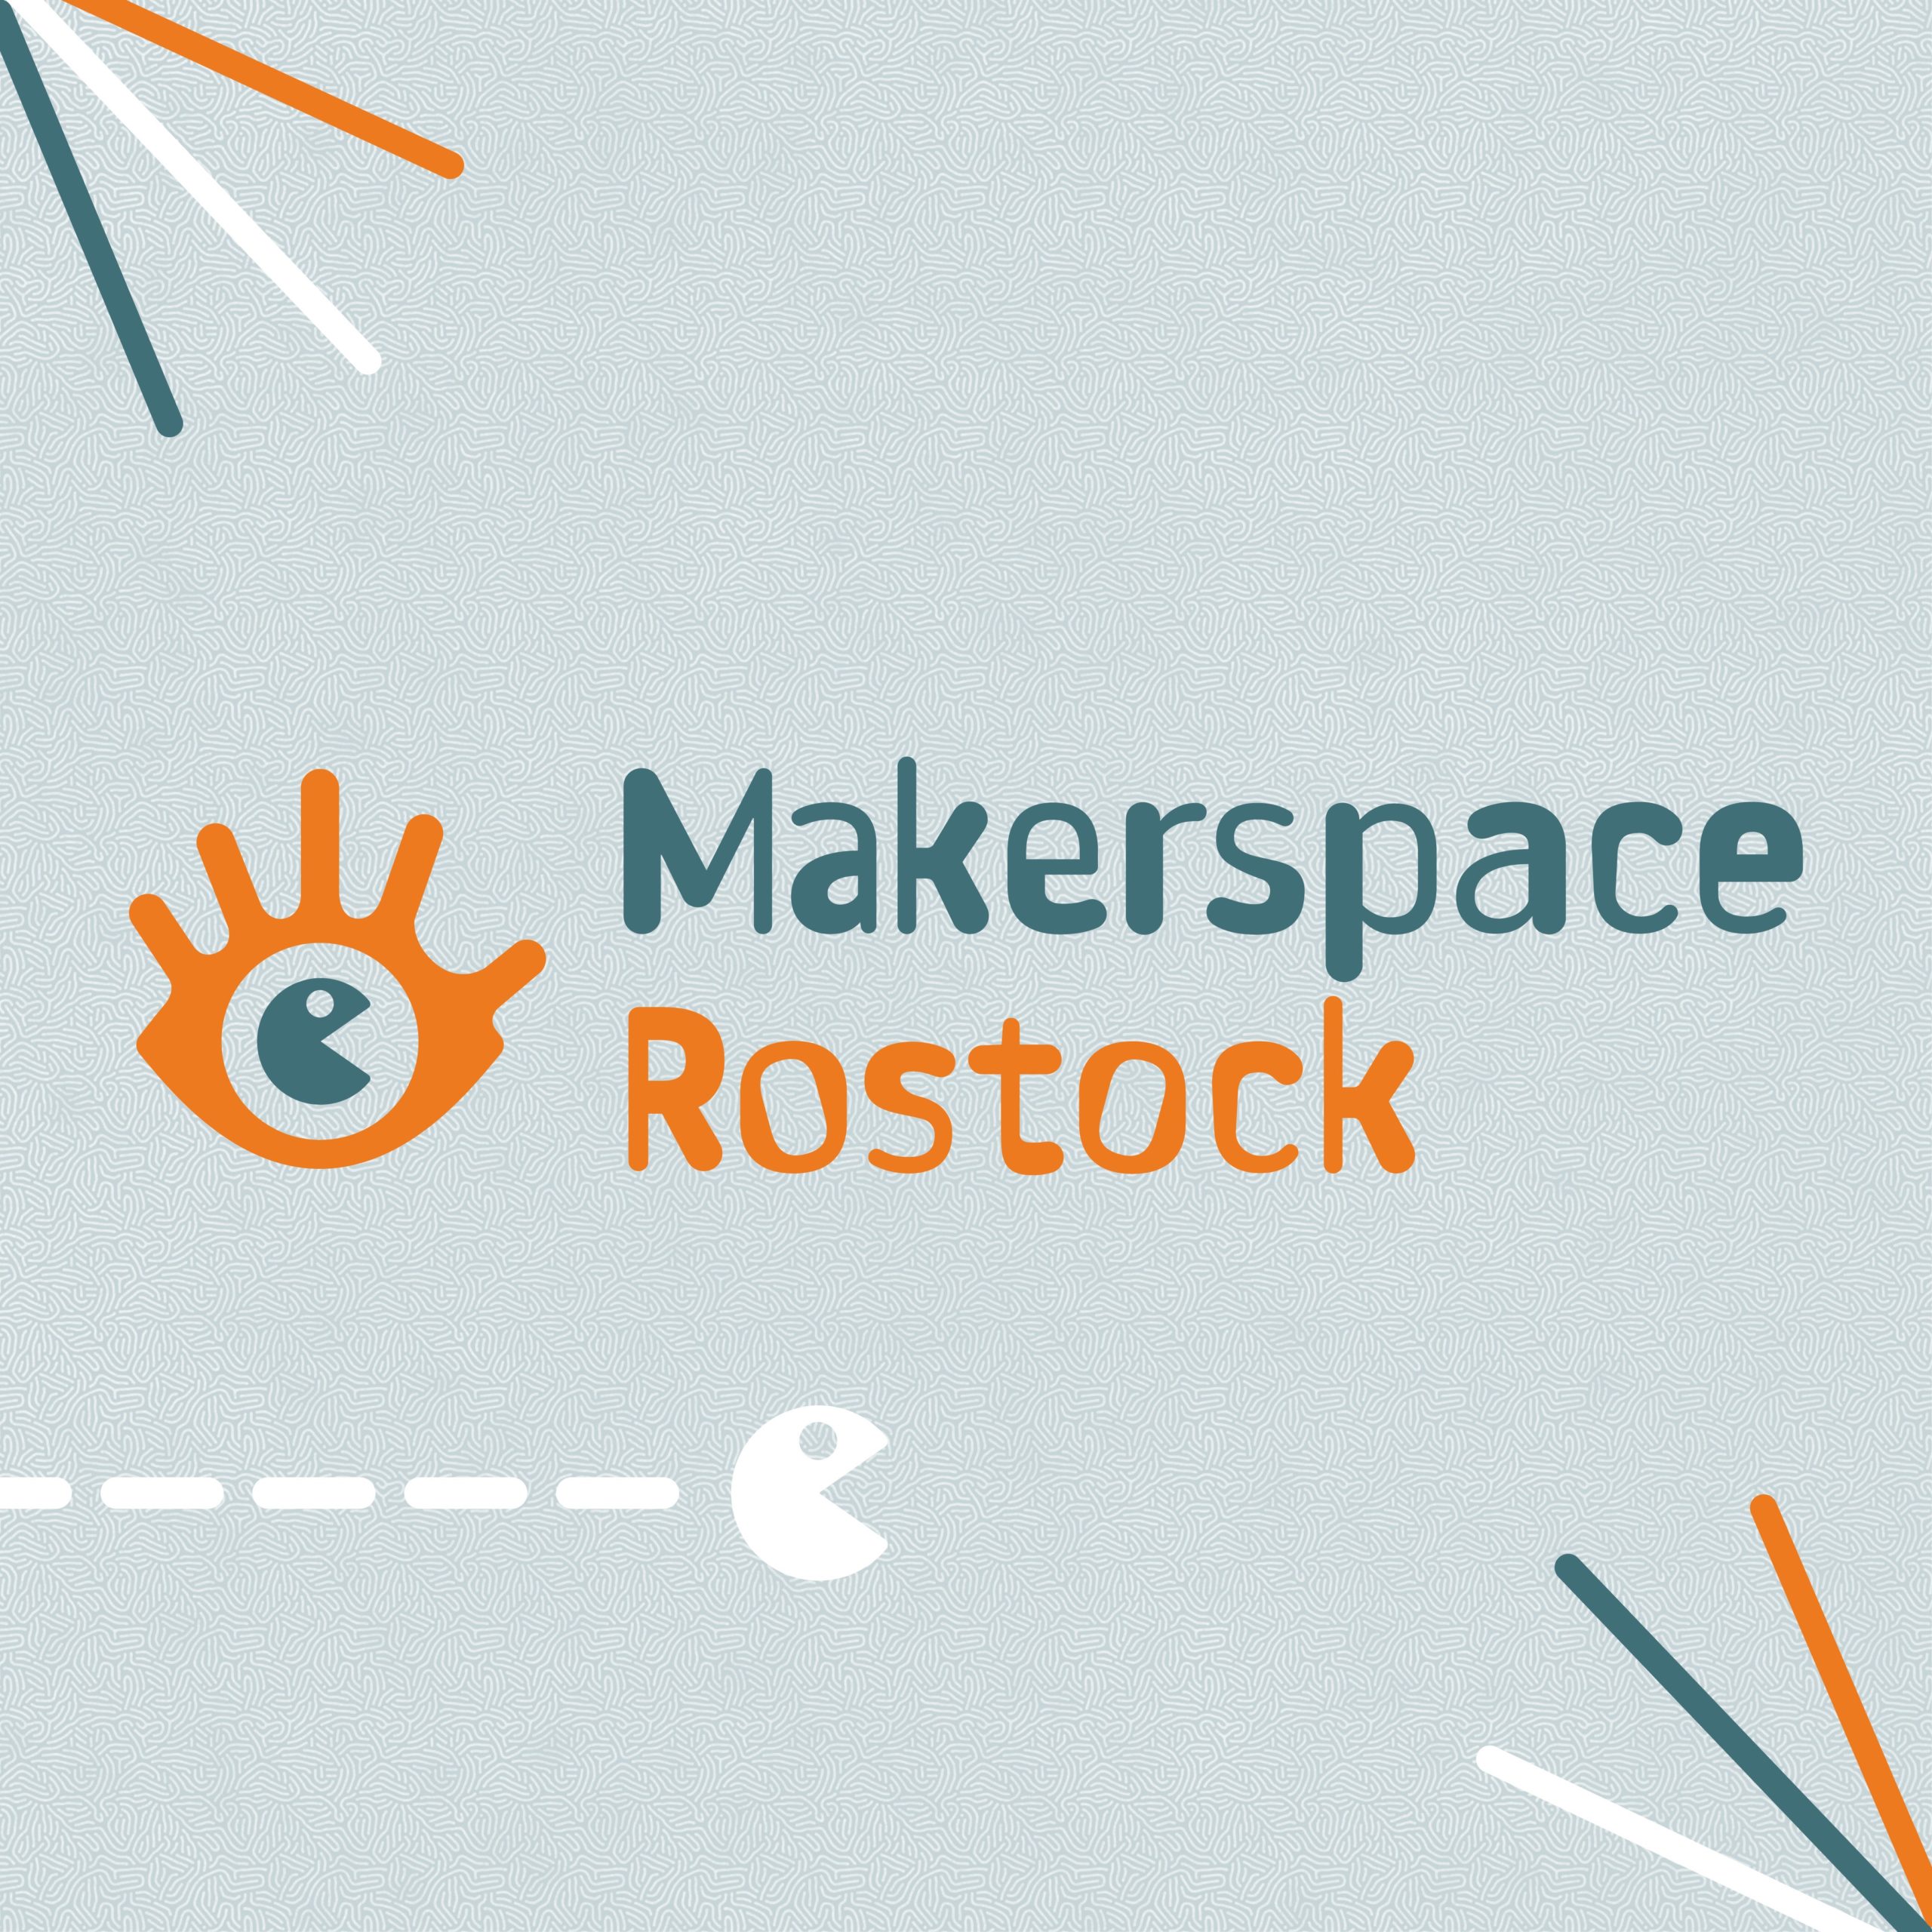 Makerspace Rostock